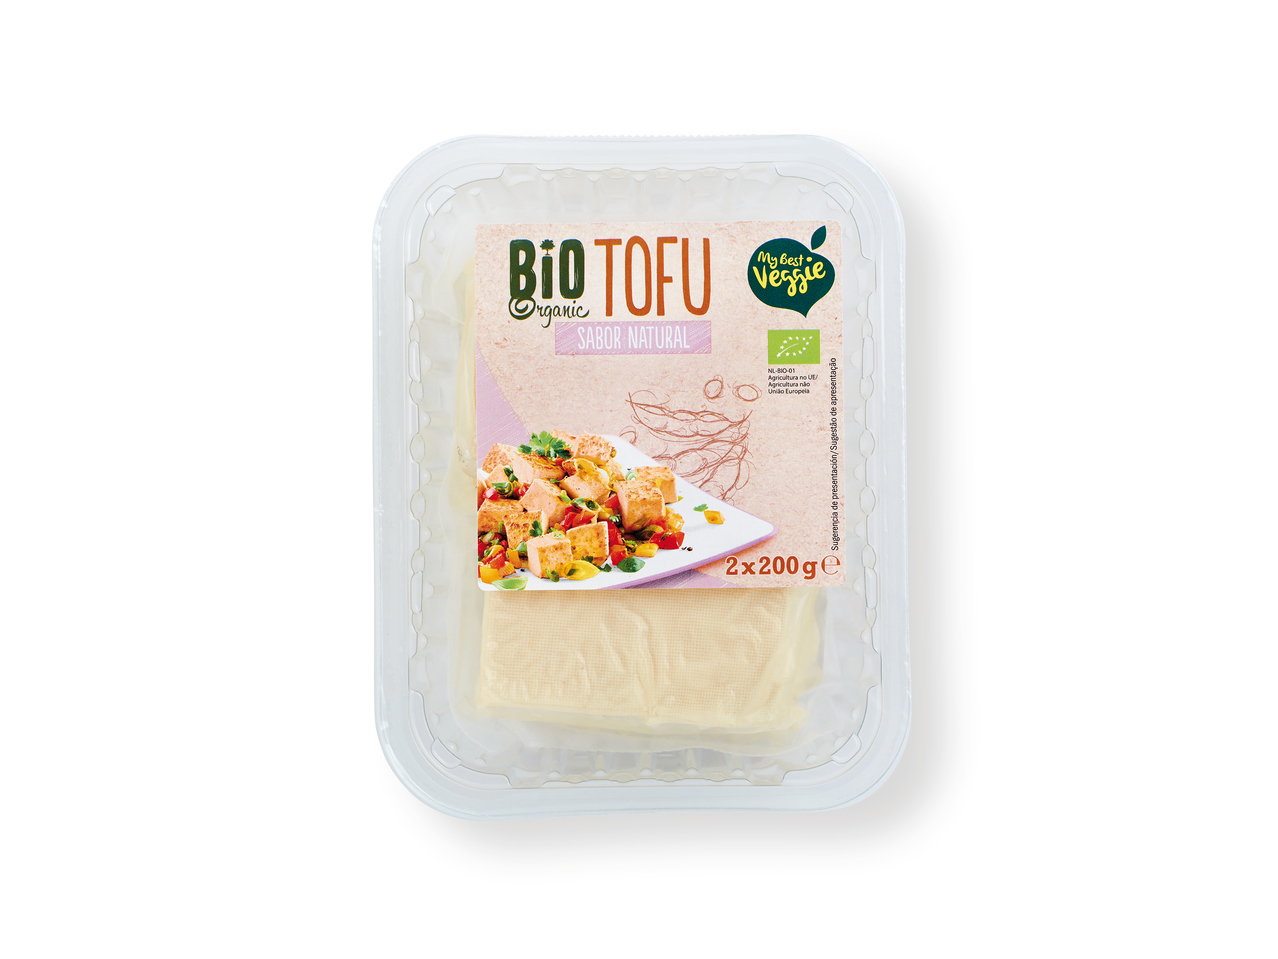 'My Best Veggie(R)' Tofu ecológico